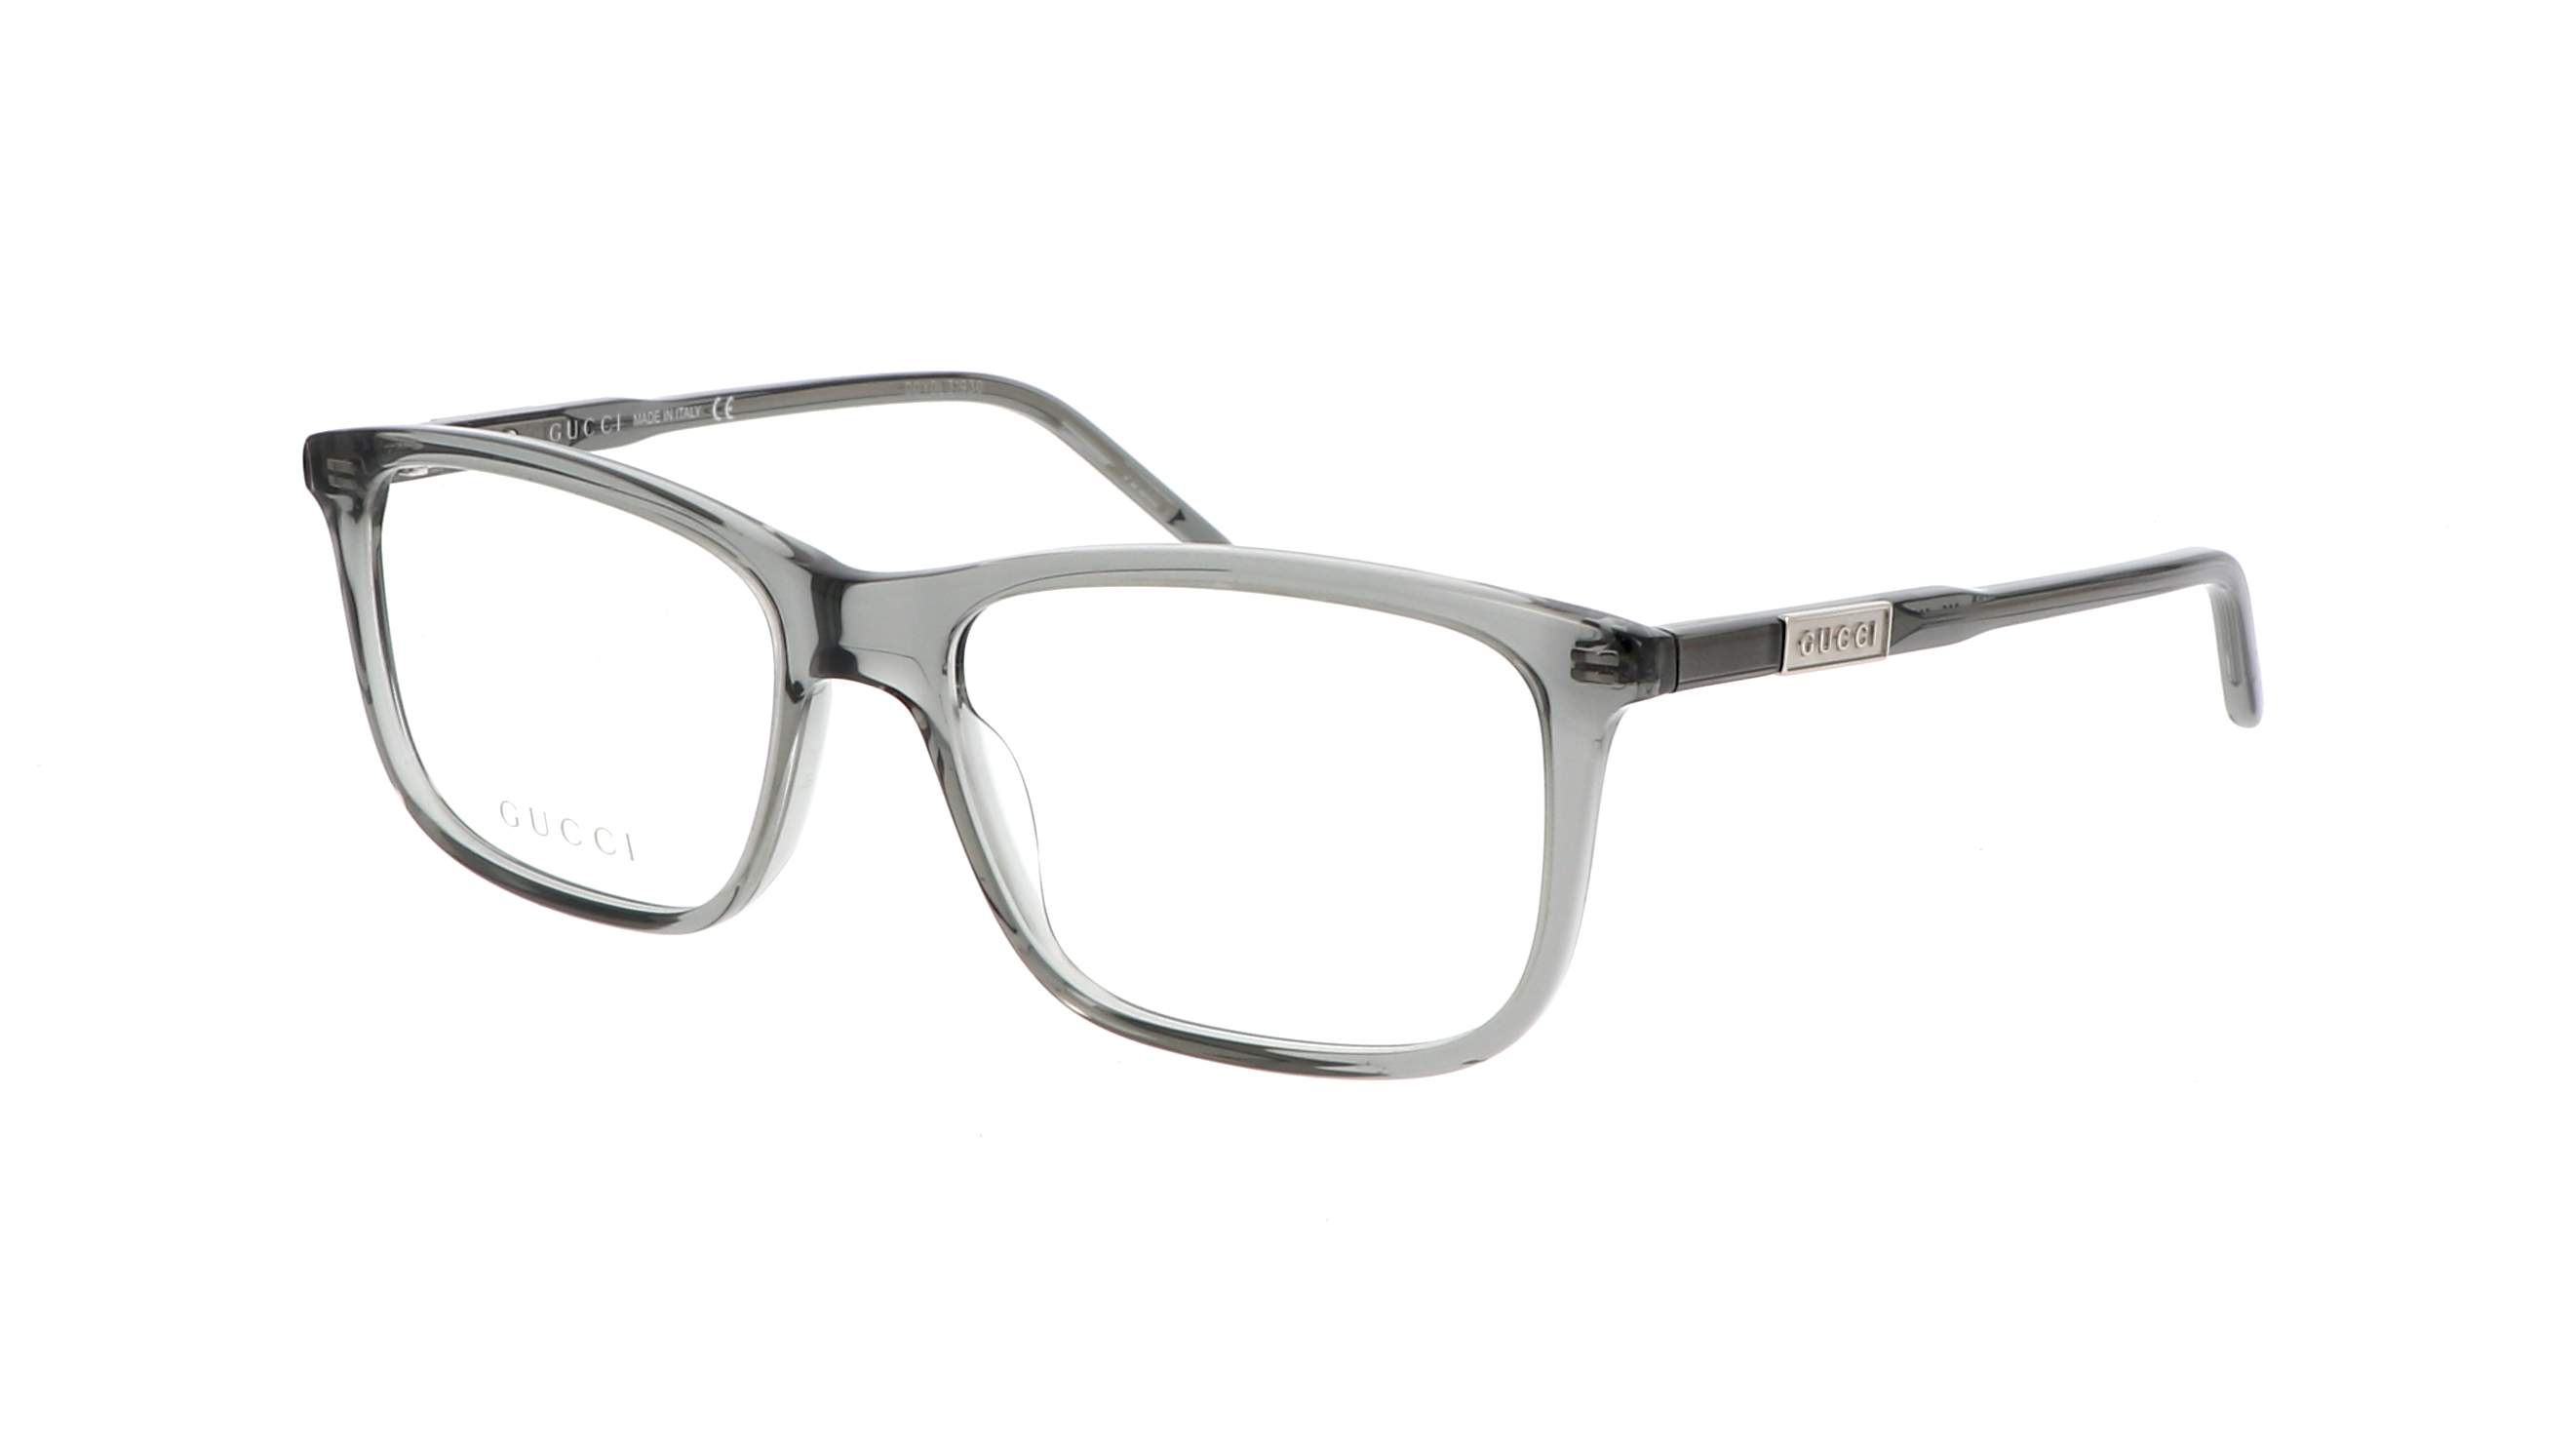 Eyeglasses Gucci GG1159O 002 56-17 Grey in stock | Price 143,33 ...